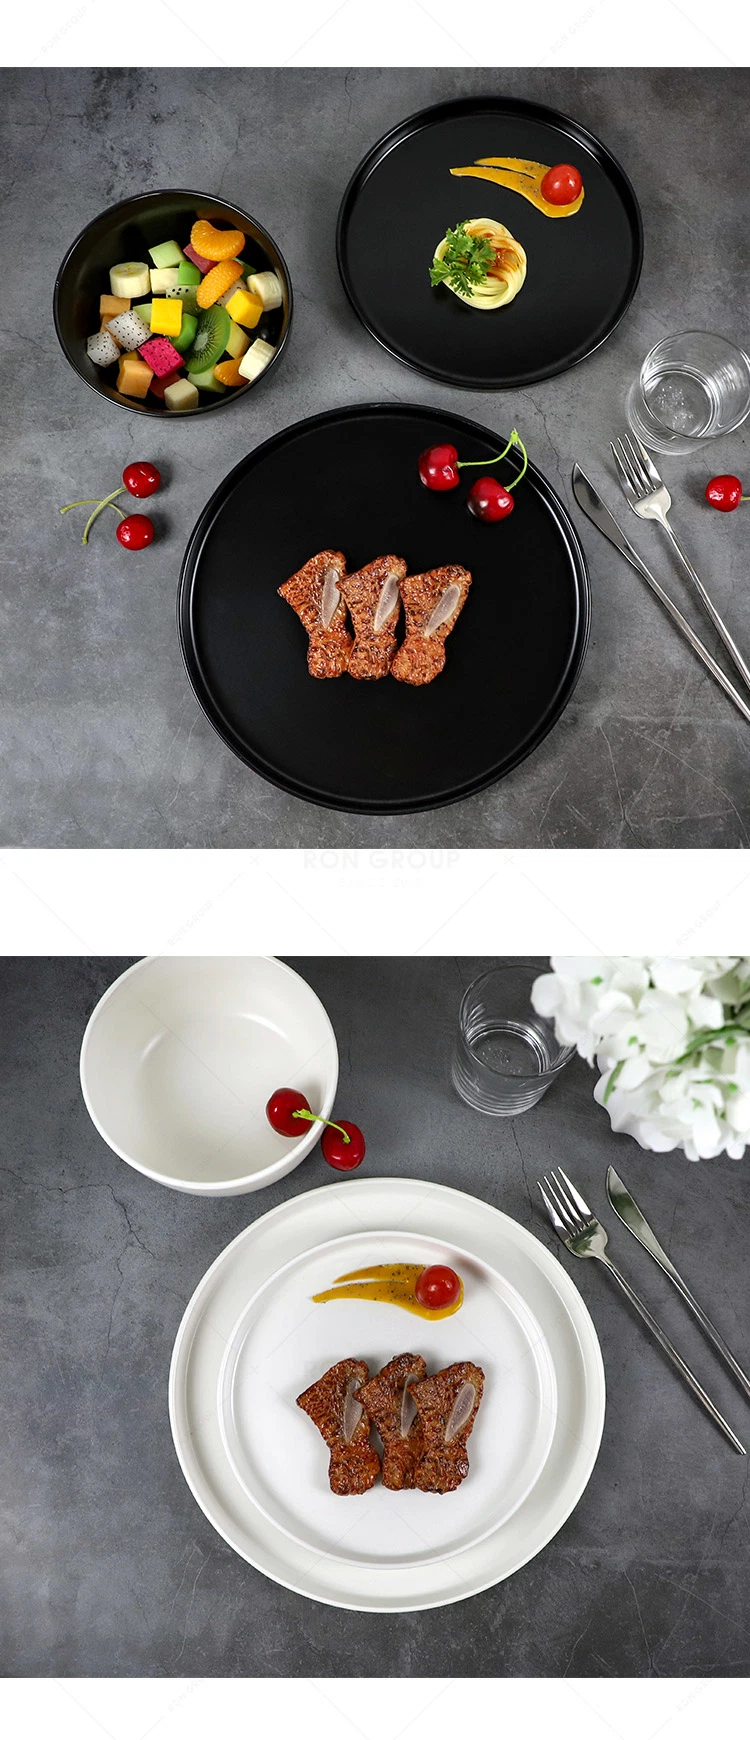 Hot Sale European and American Style 12PCS Stoneware Ceramic Dinnerware Set